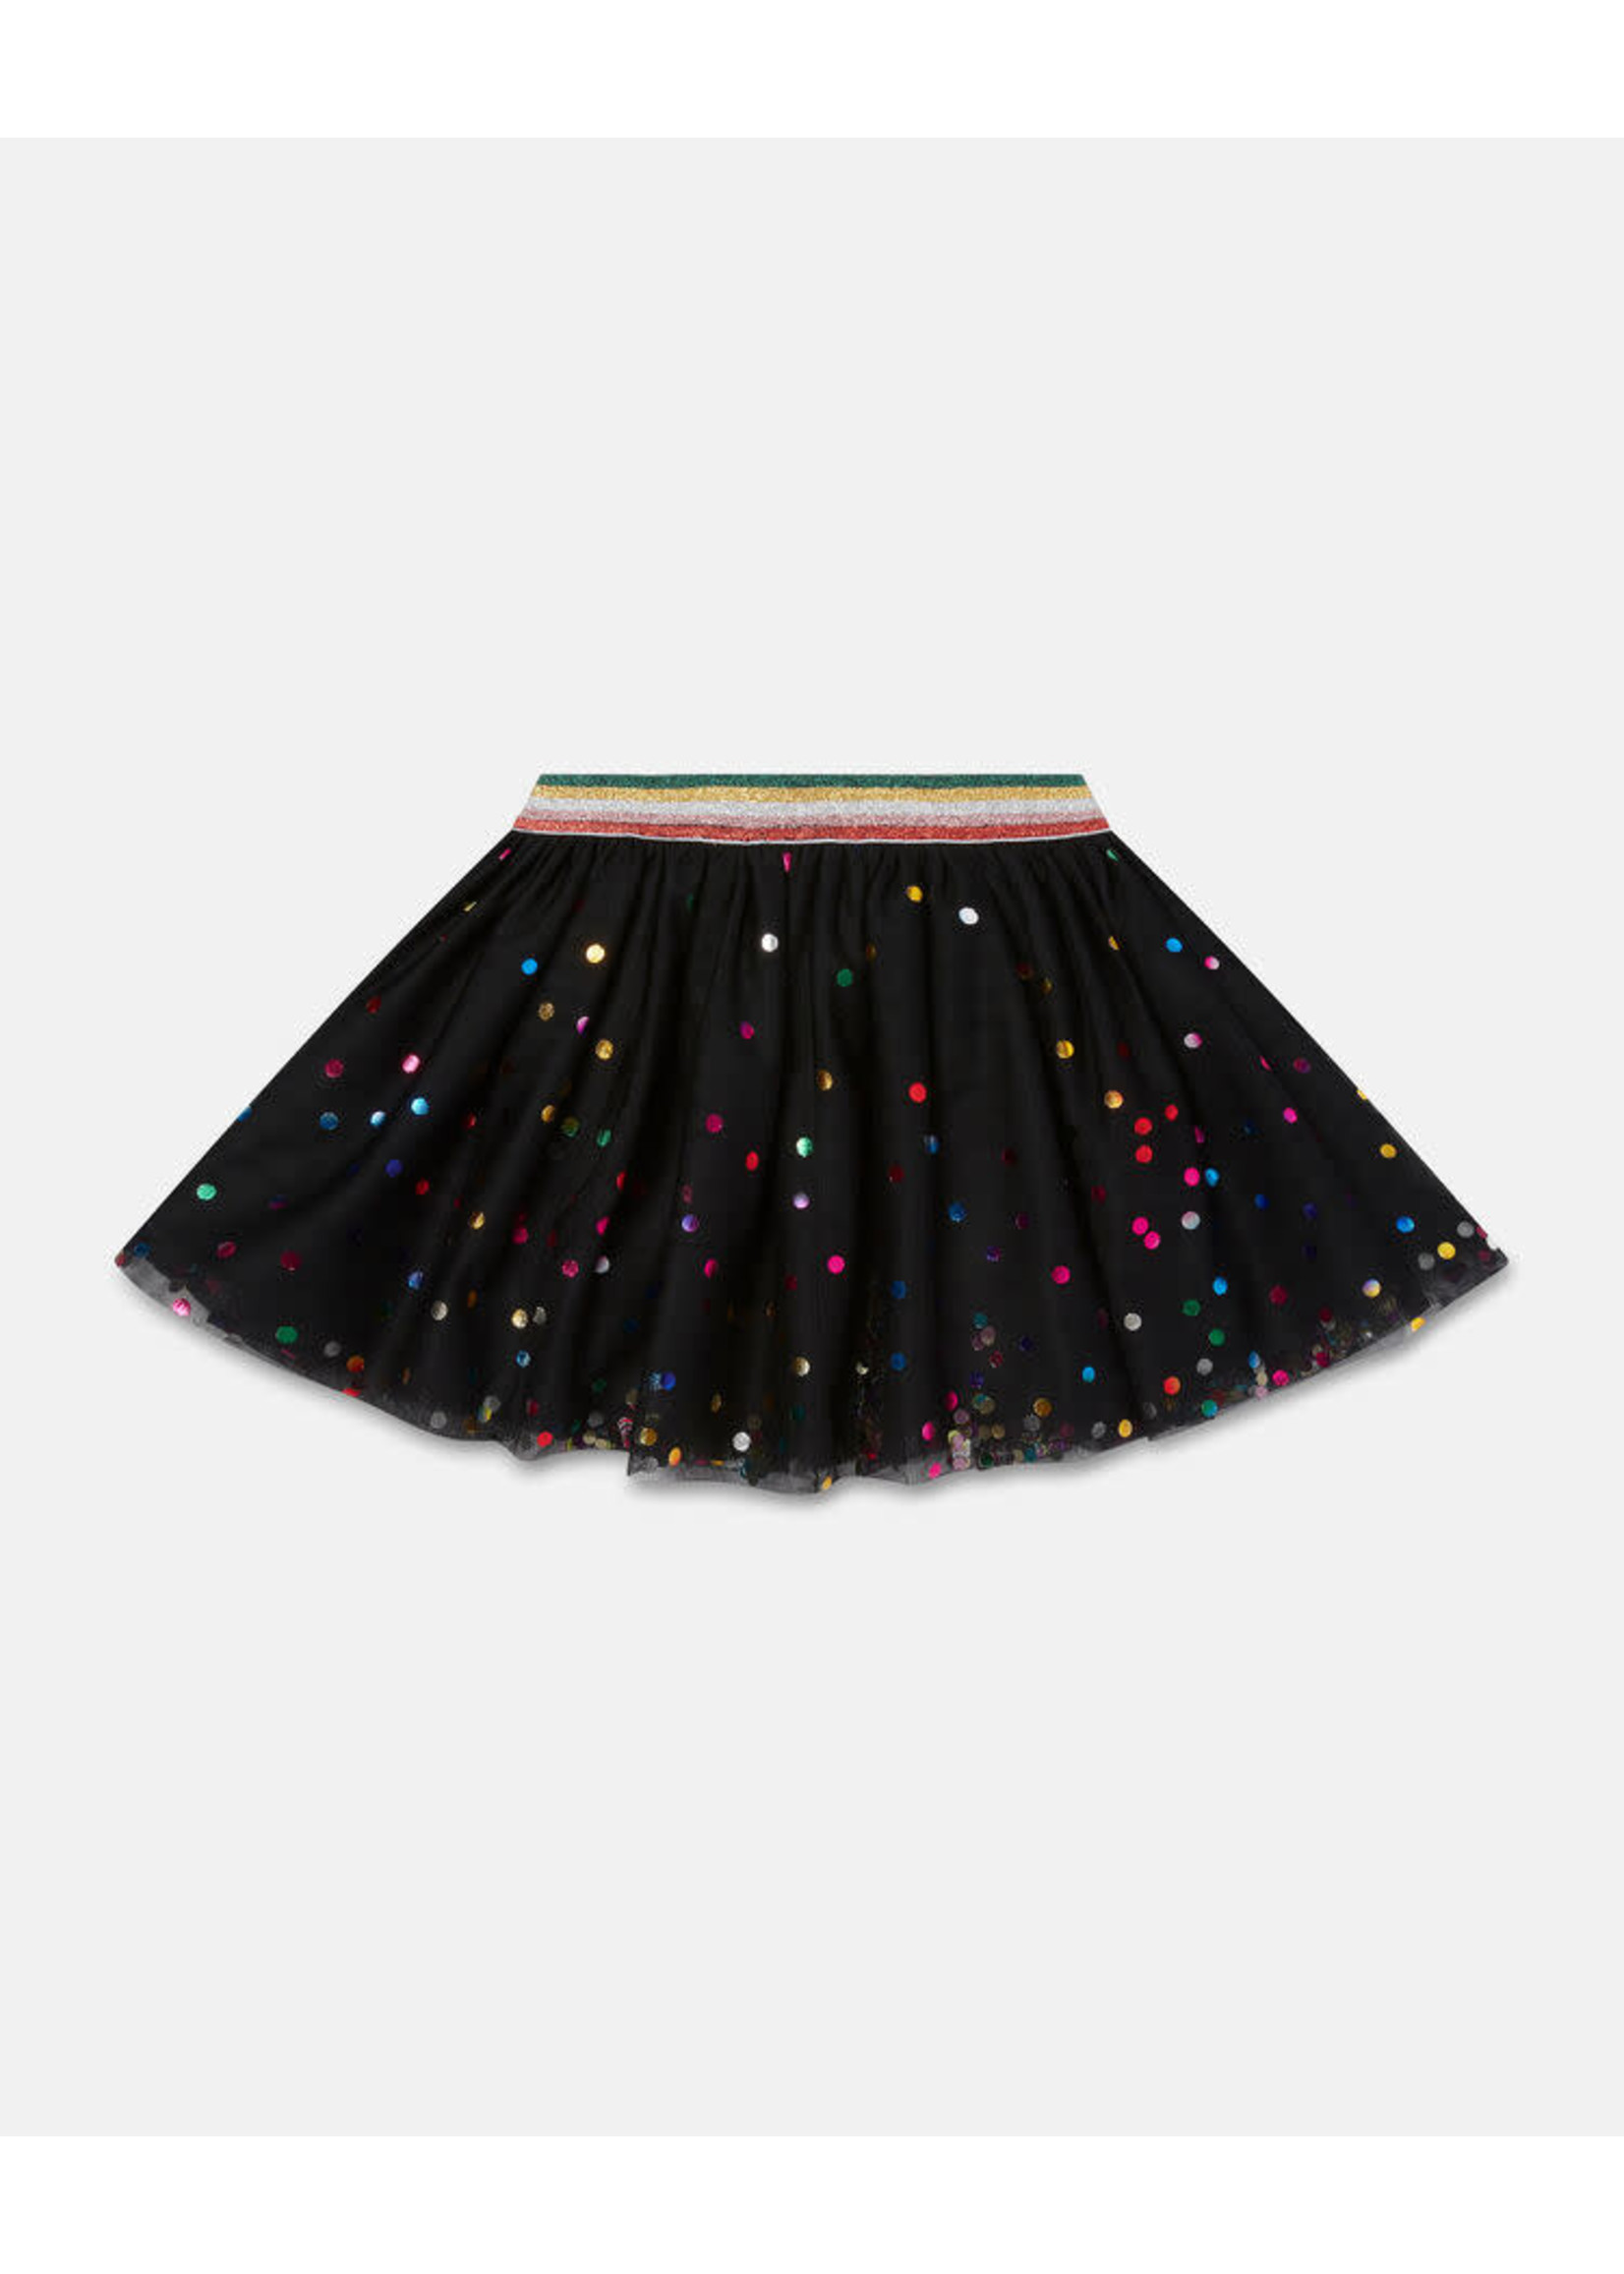 Stella McCartney Stella McCartney Girl skirt black with glitters details - 8R7A81